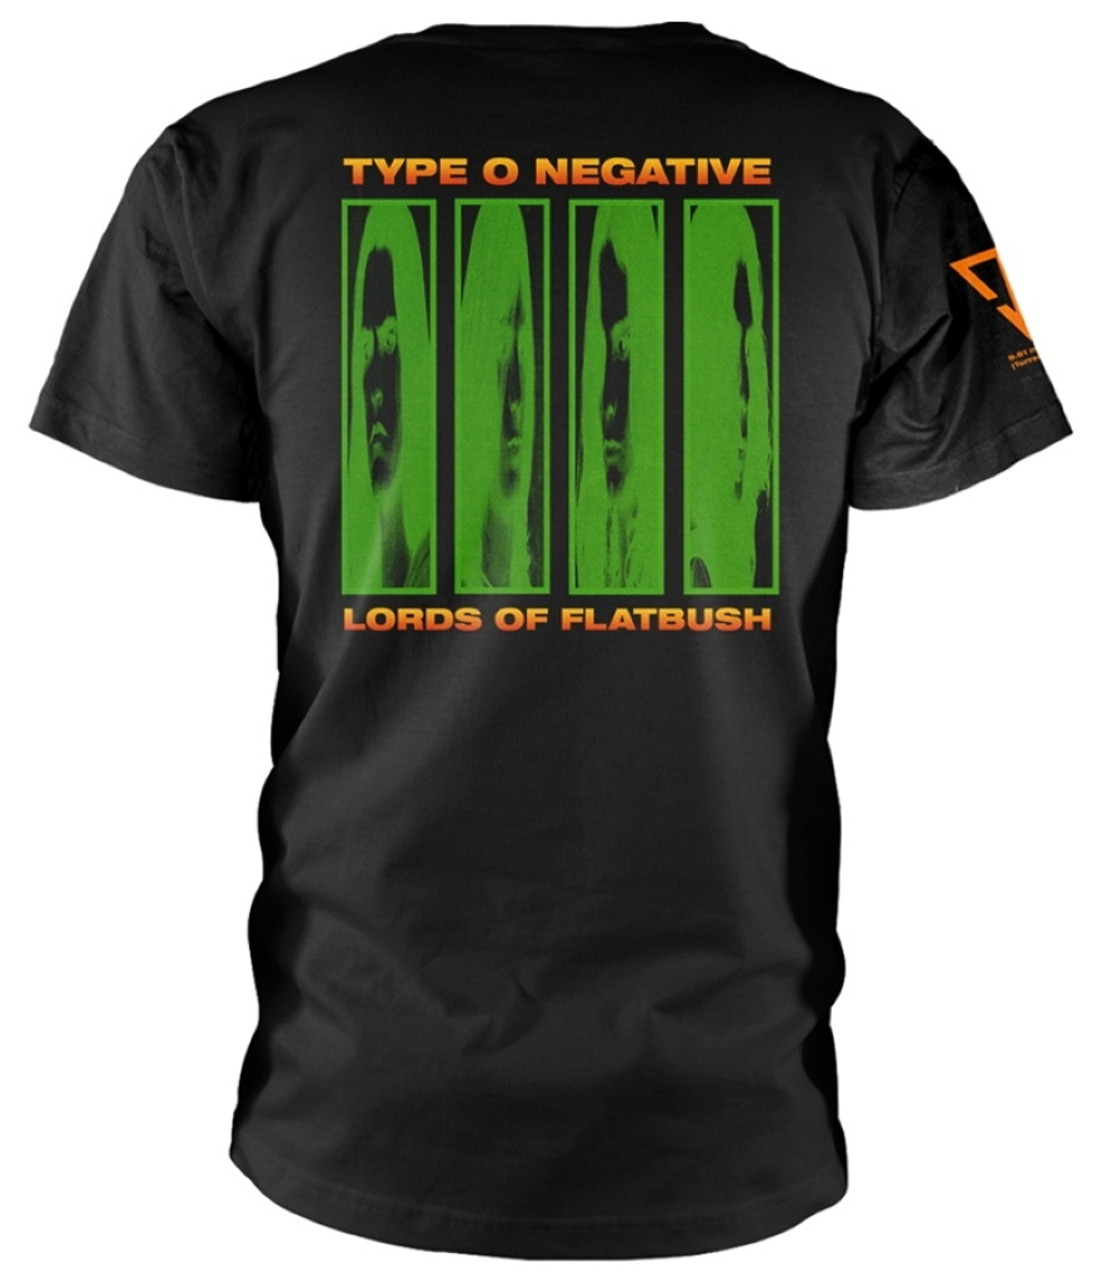 Type O Negative 'Suspended In Dusk' (Black) T-Shirt